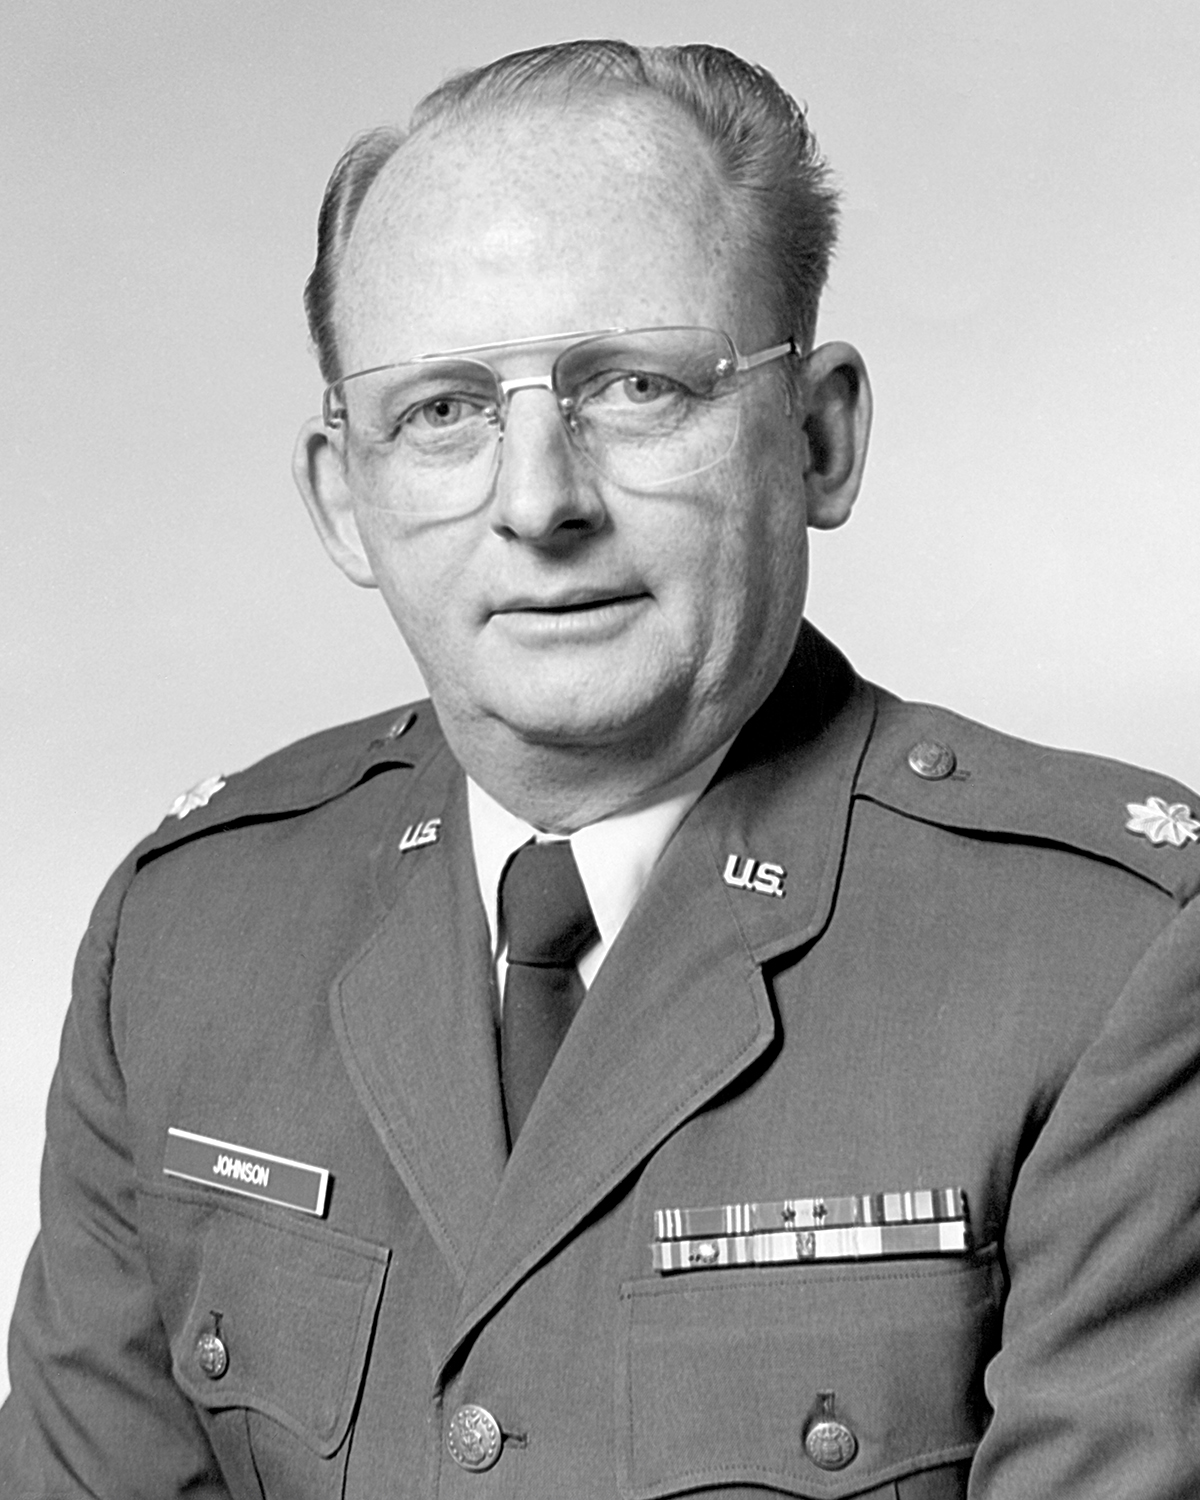 Harry G. Johnson